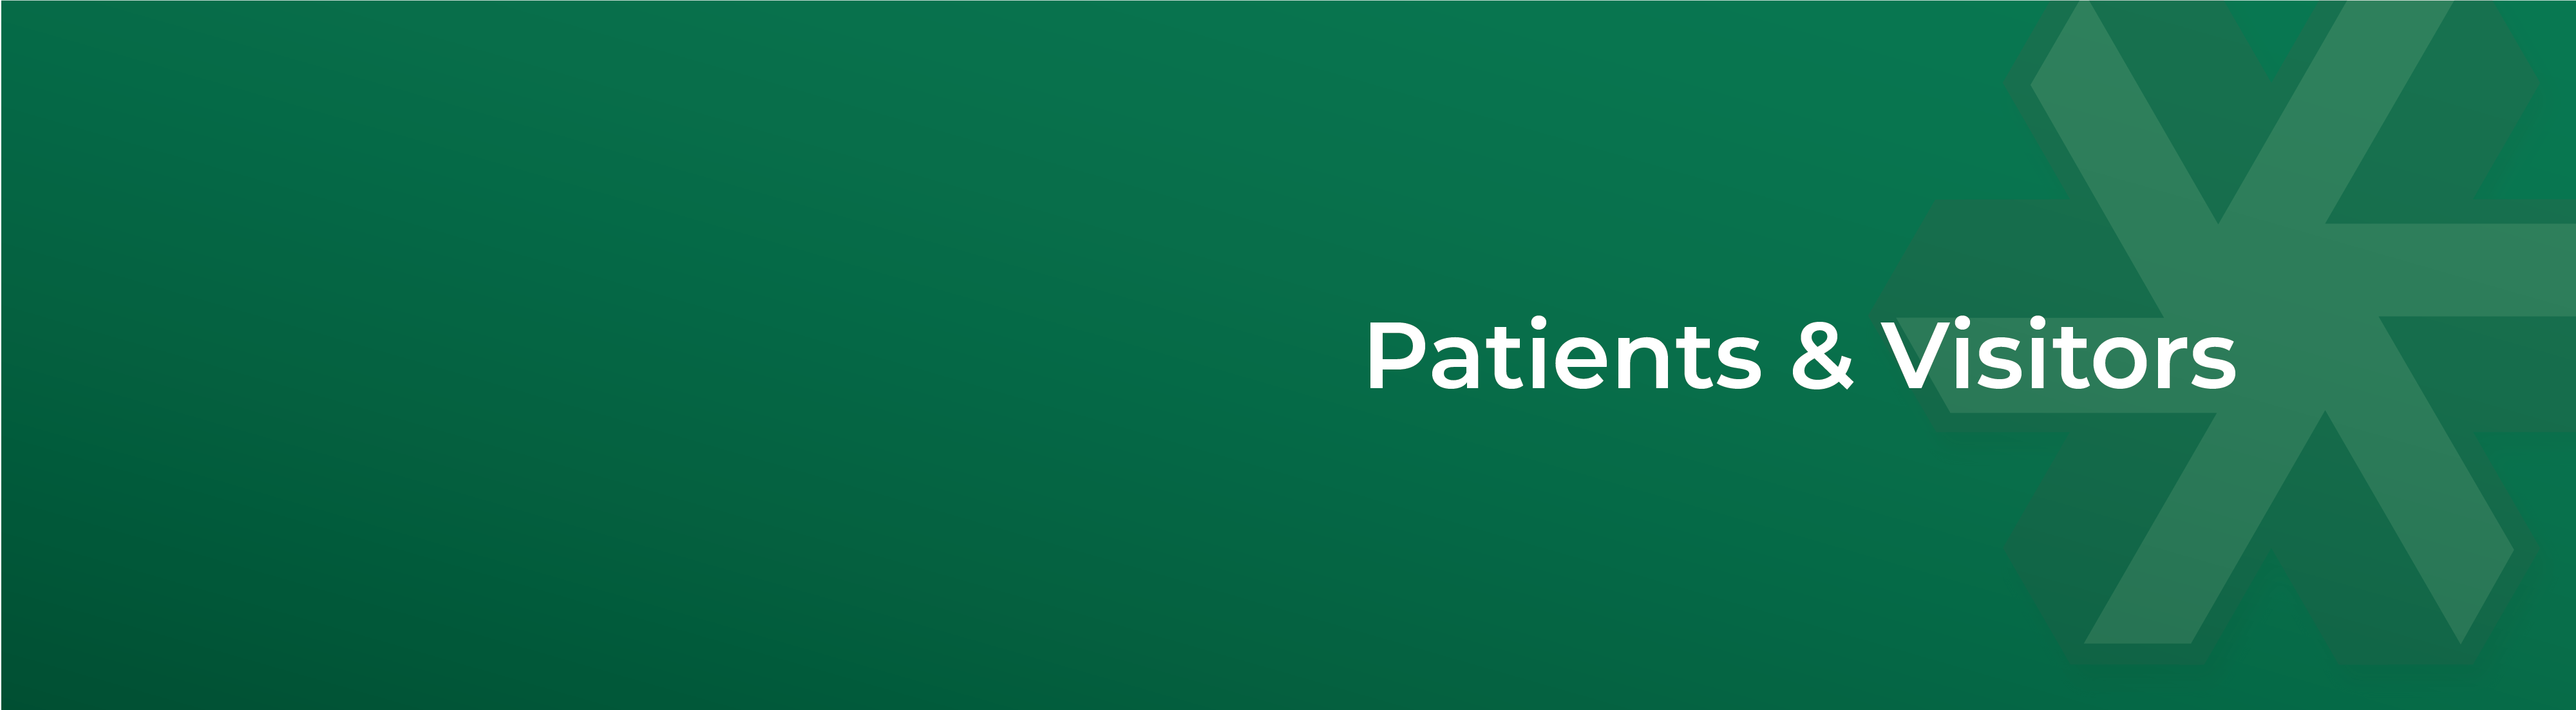 PatientsandVisitors-Header-01